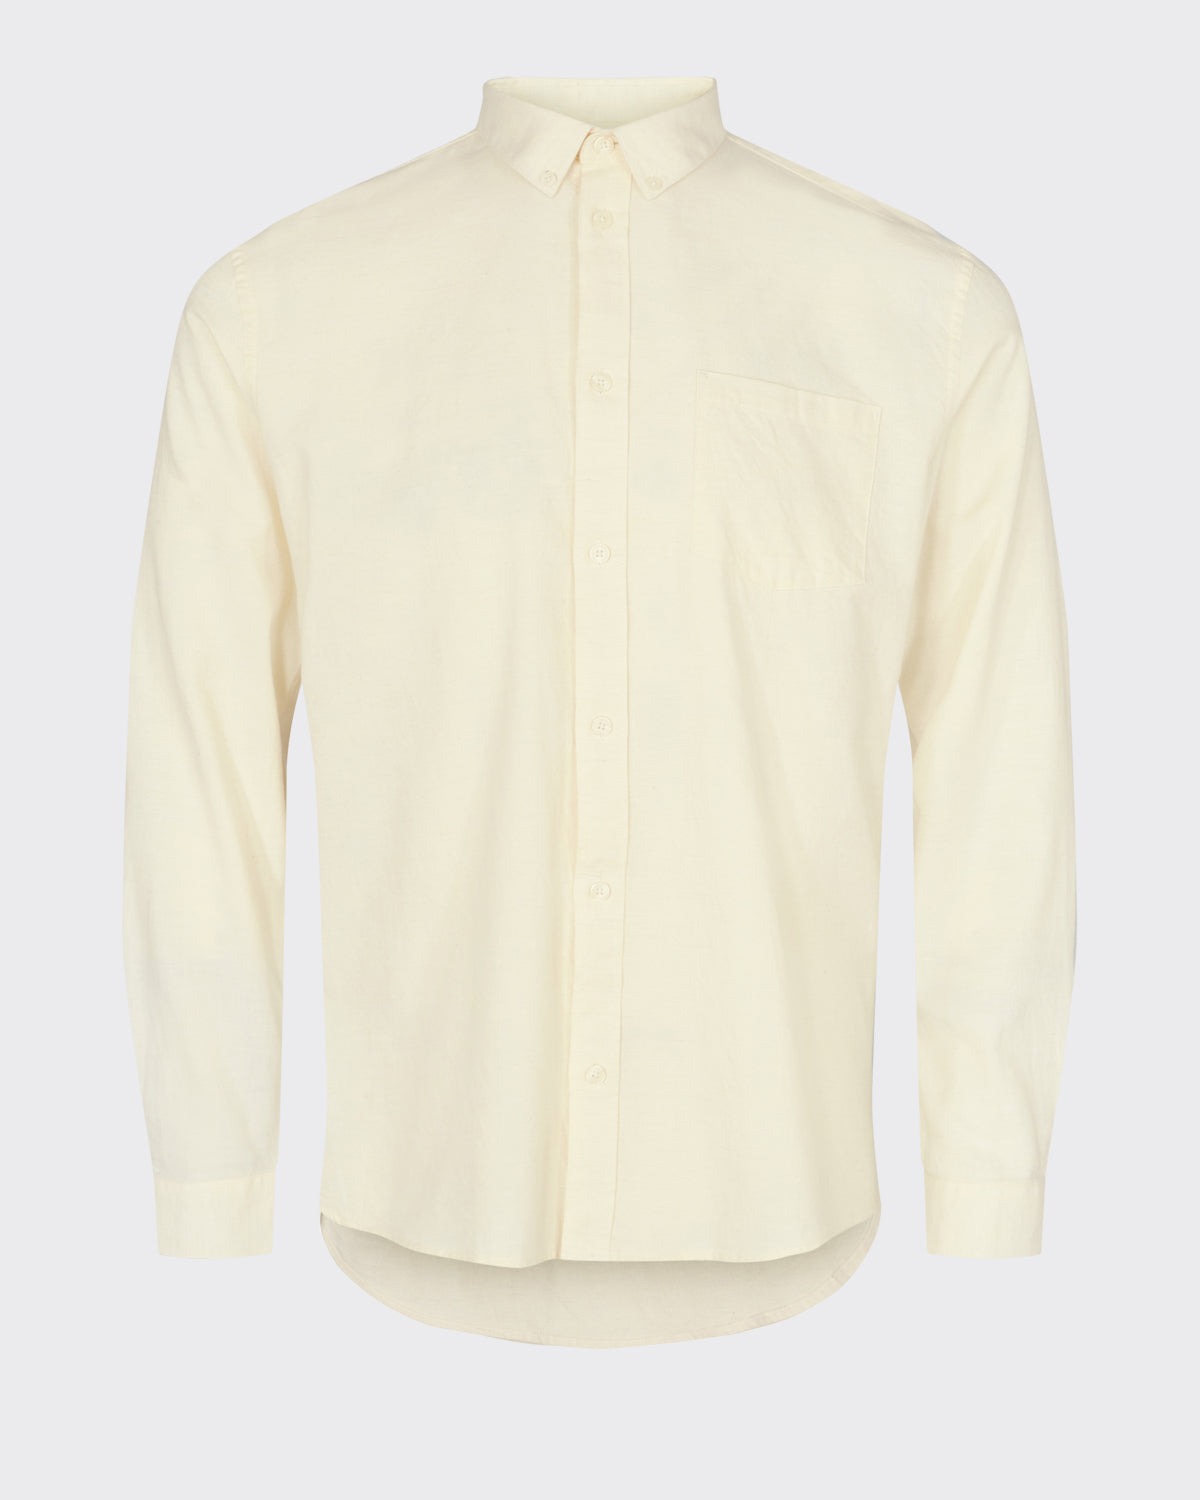 Minimum Men's Jay Shirt in Broken White